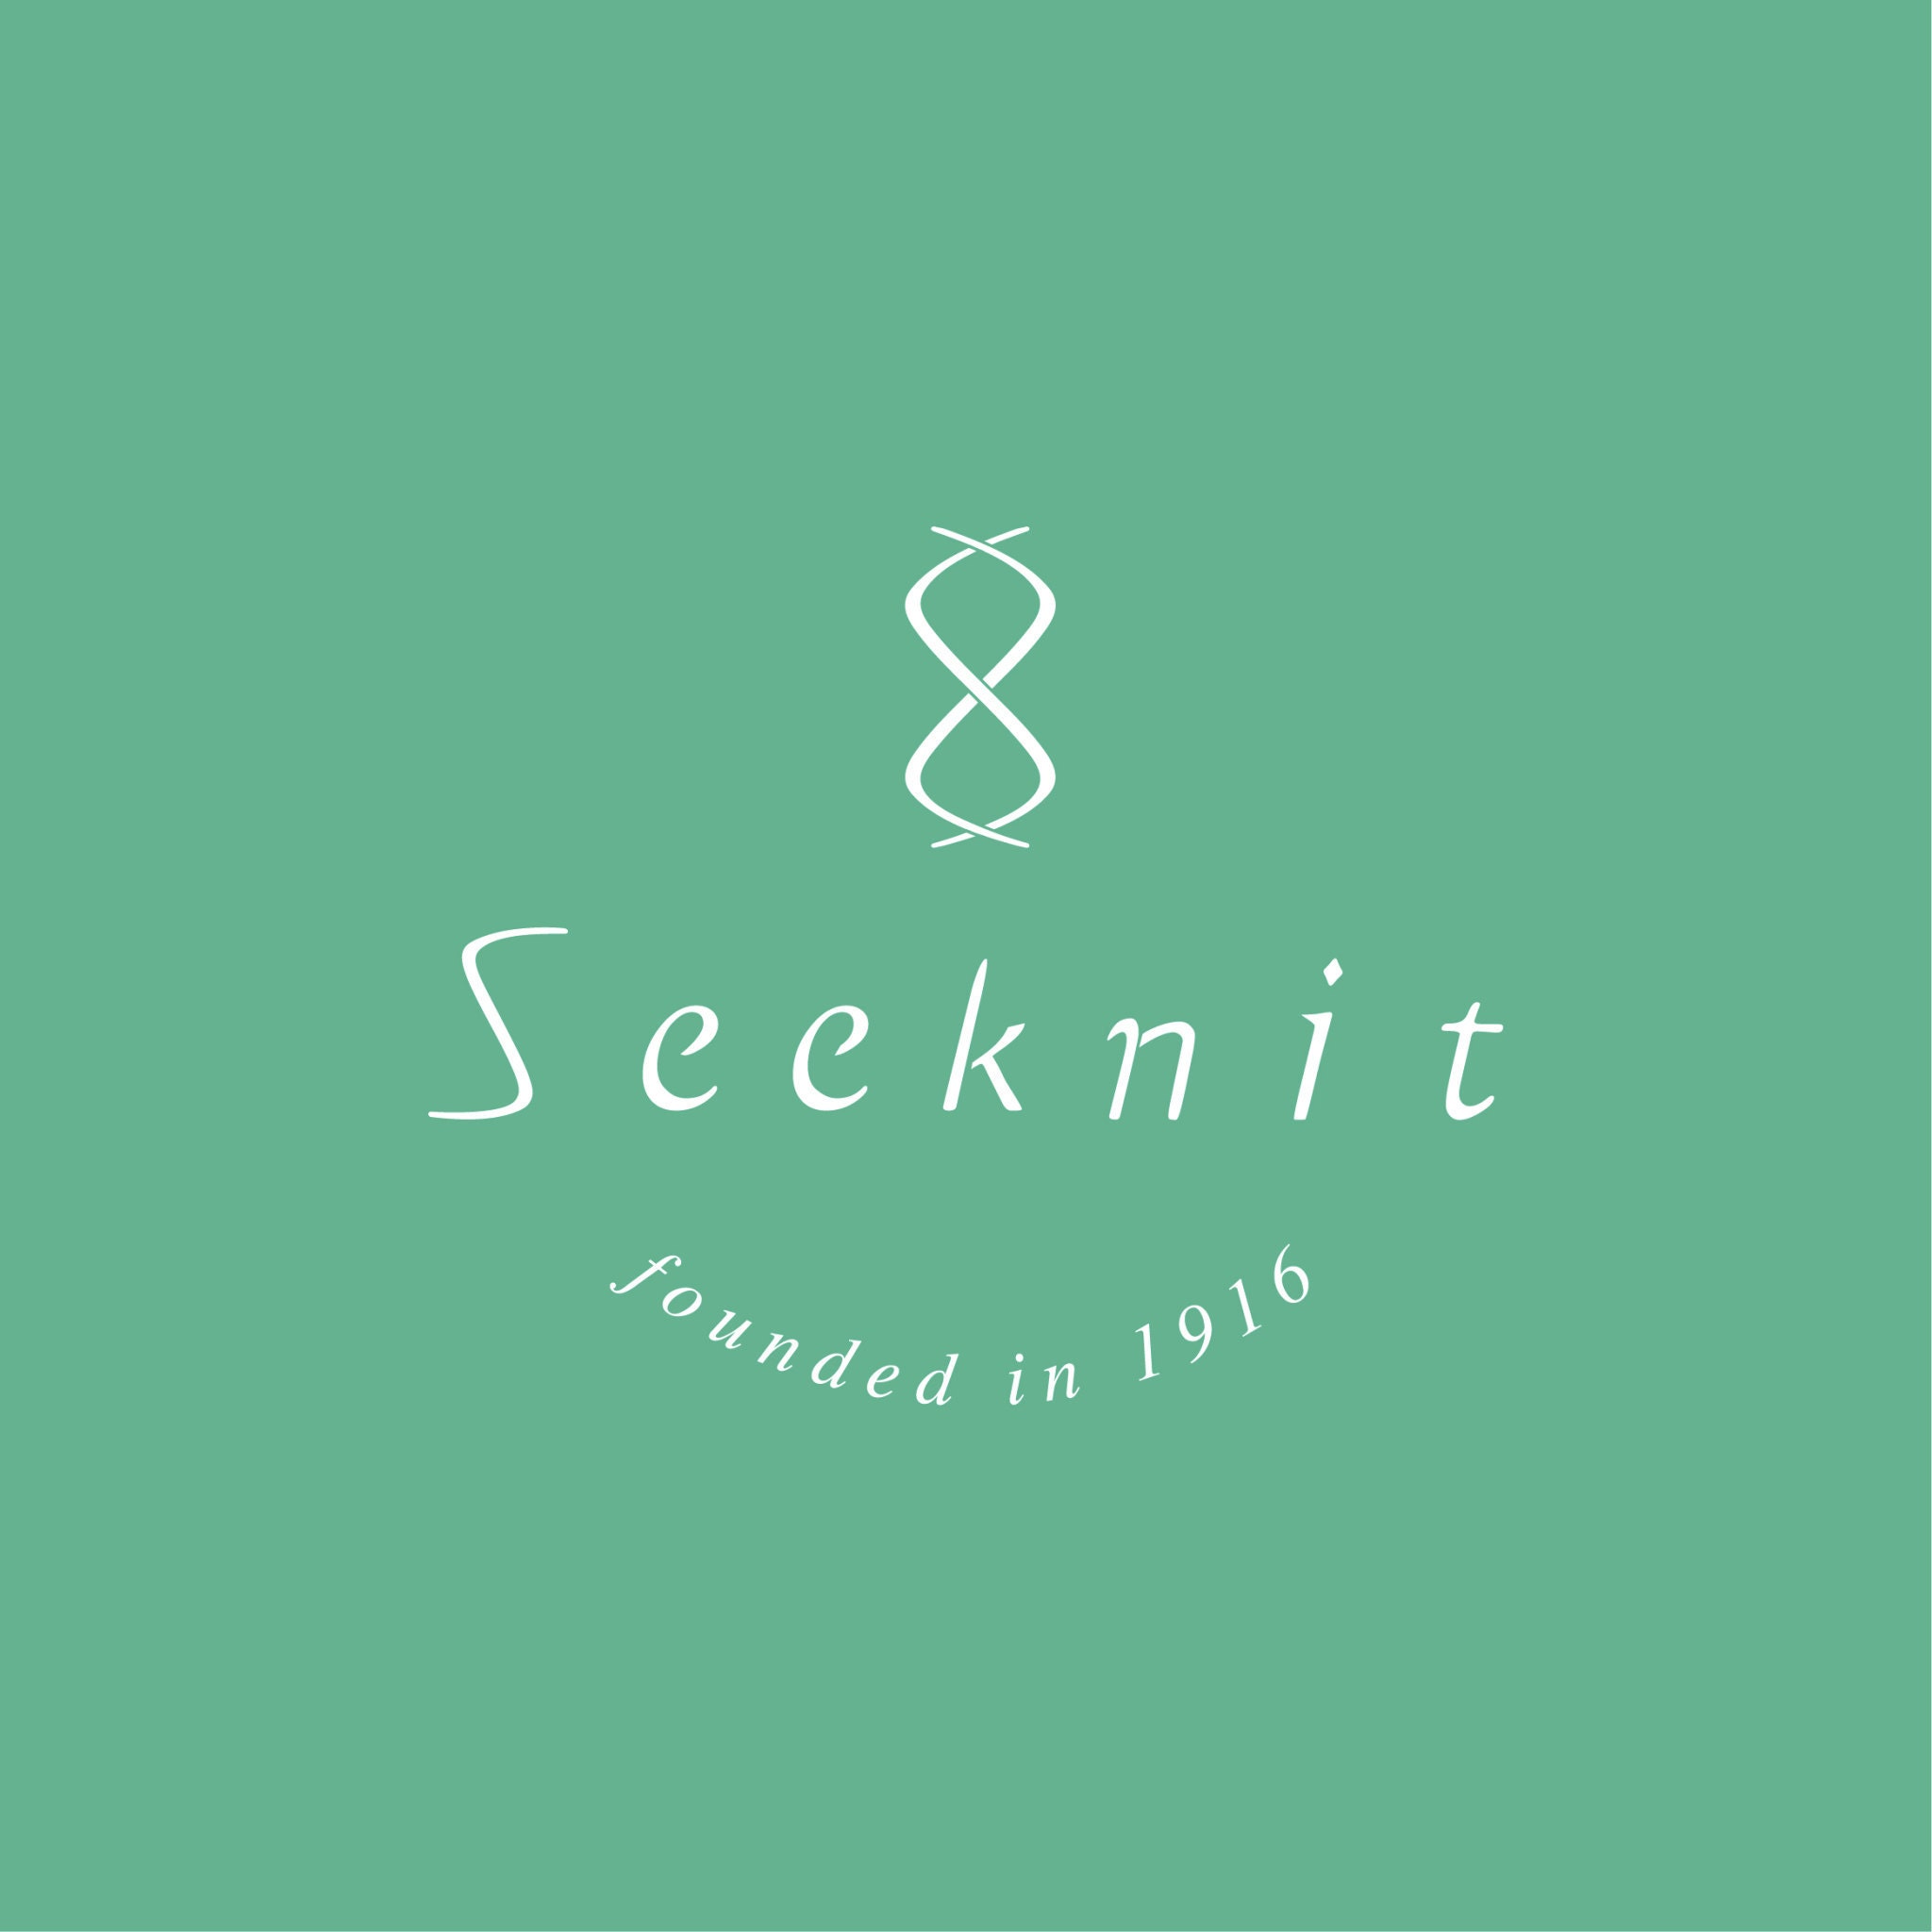 Seeknit, Cord Maker Plate Set, French Knitting, French Knitter